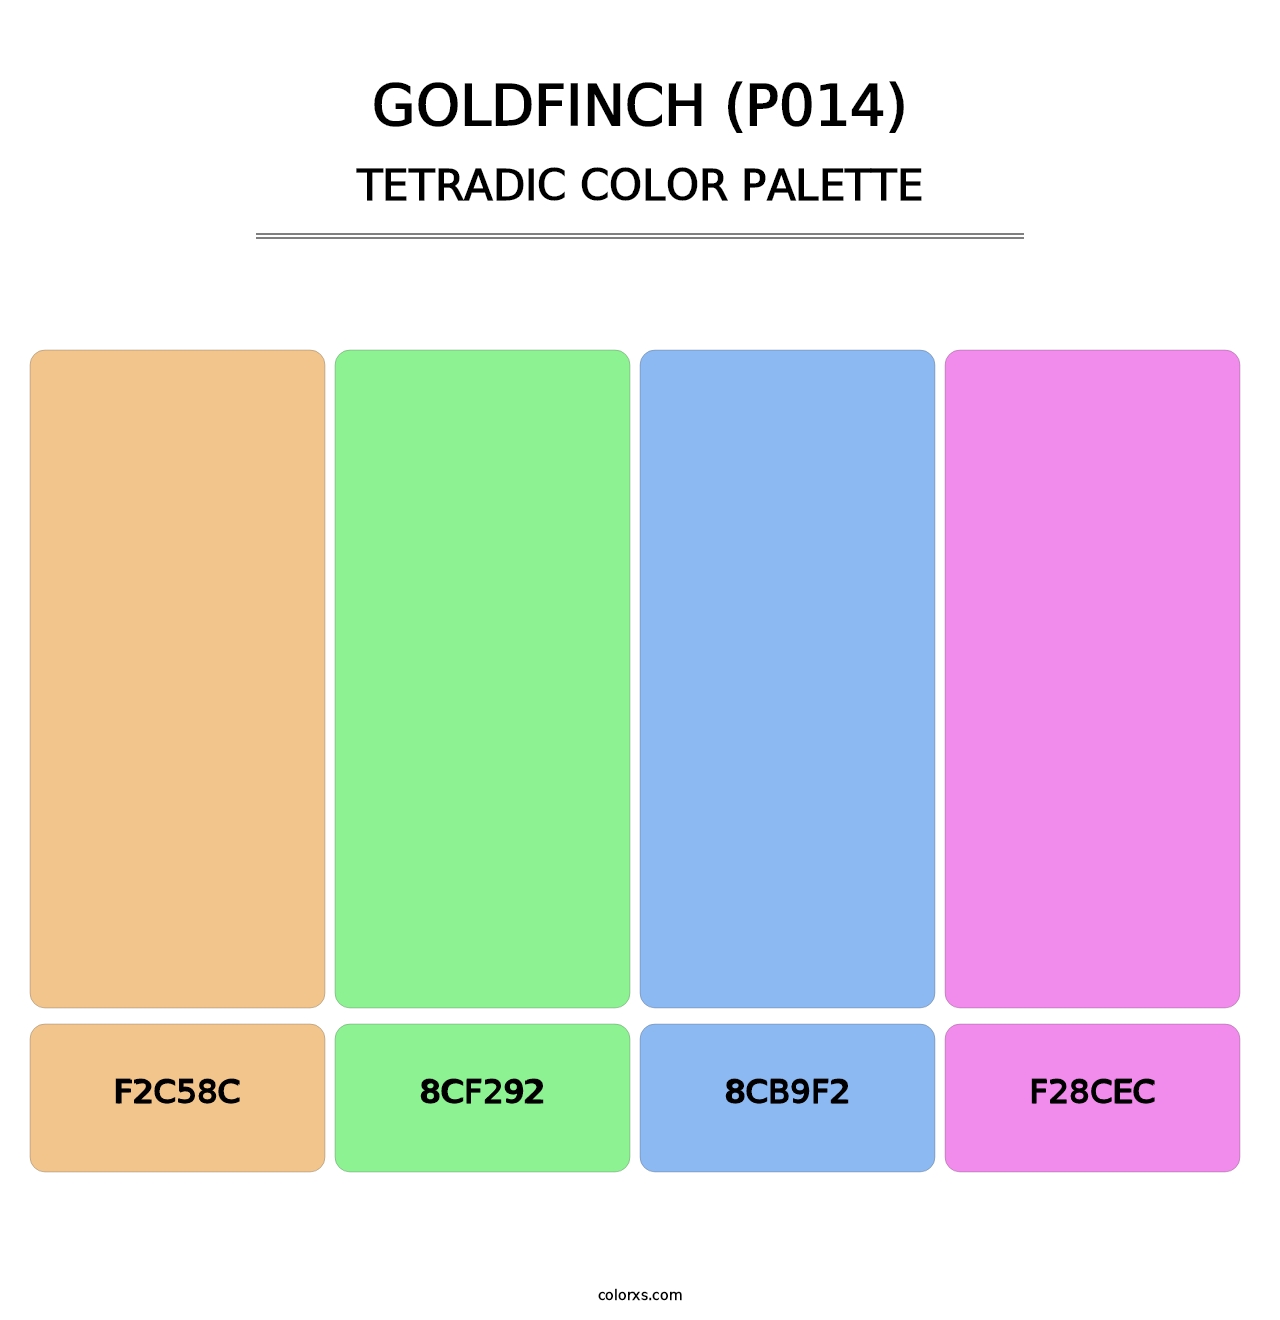 Goldfinch (P014) - Tetradic Color Palette